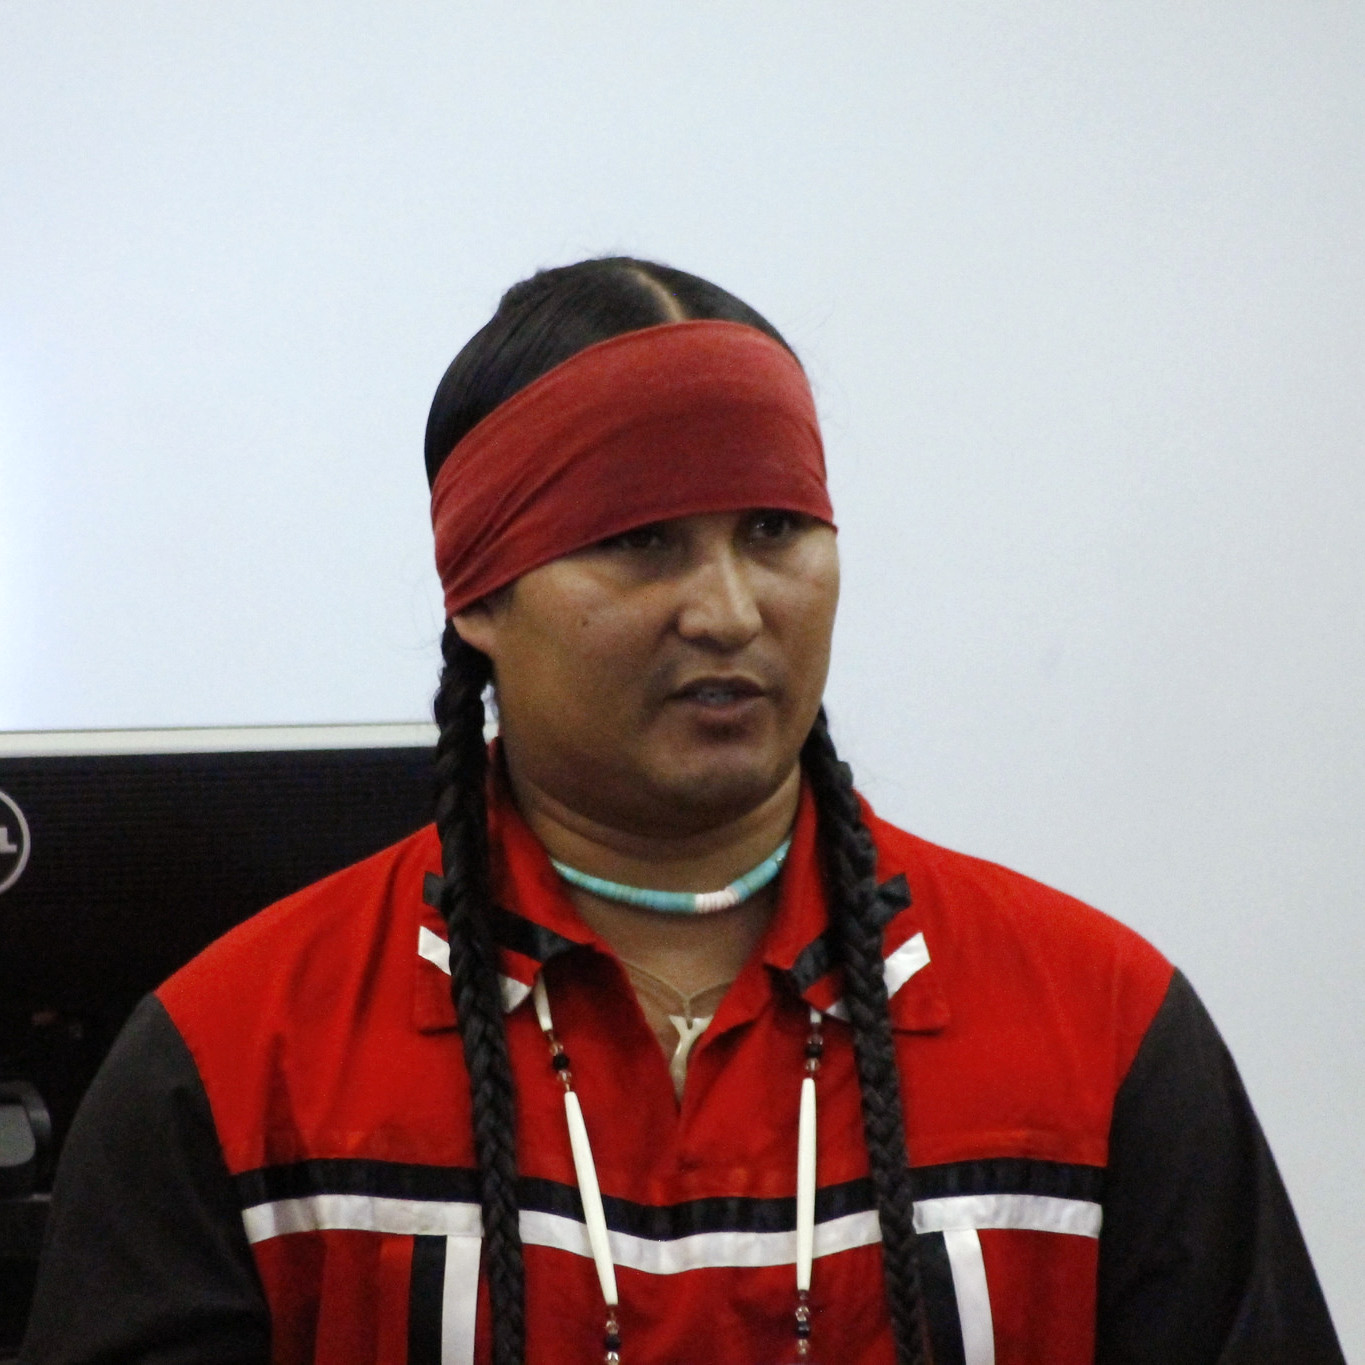 Jacob Alvarado speaks at California Indian Days at the American Indian Studies department.